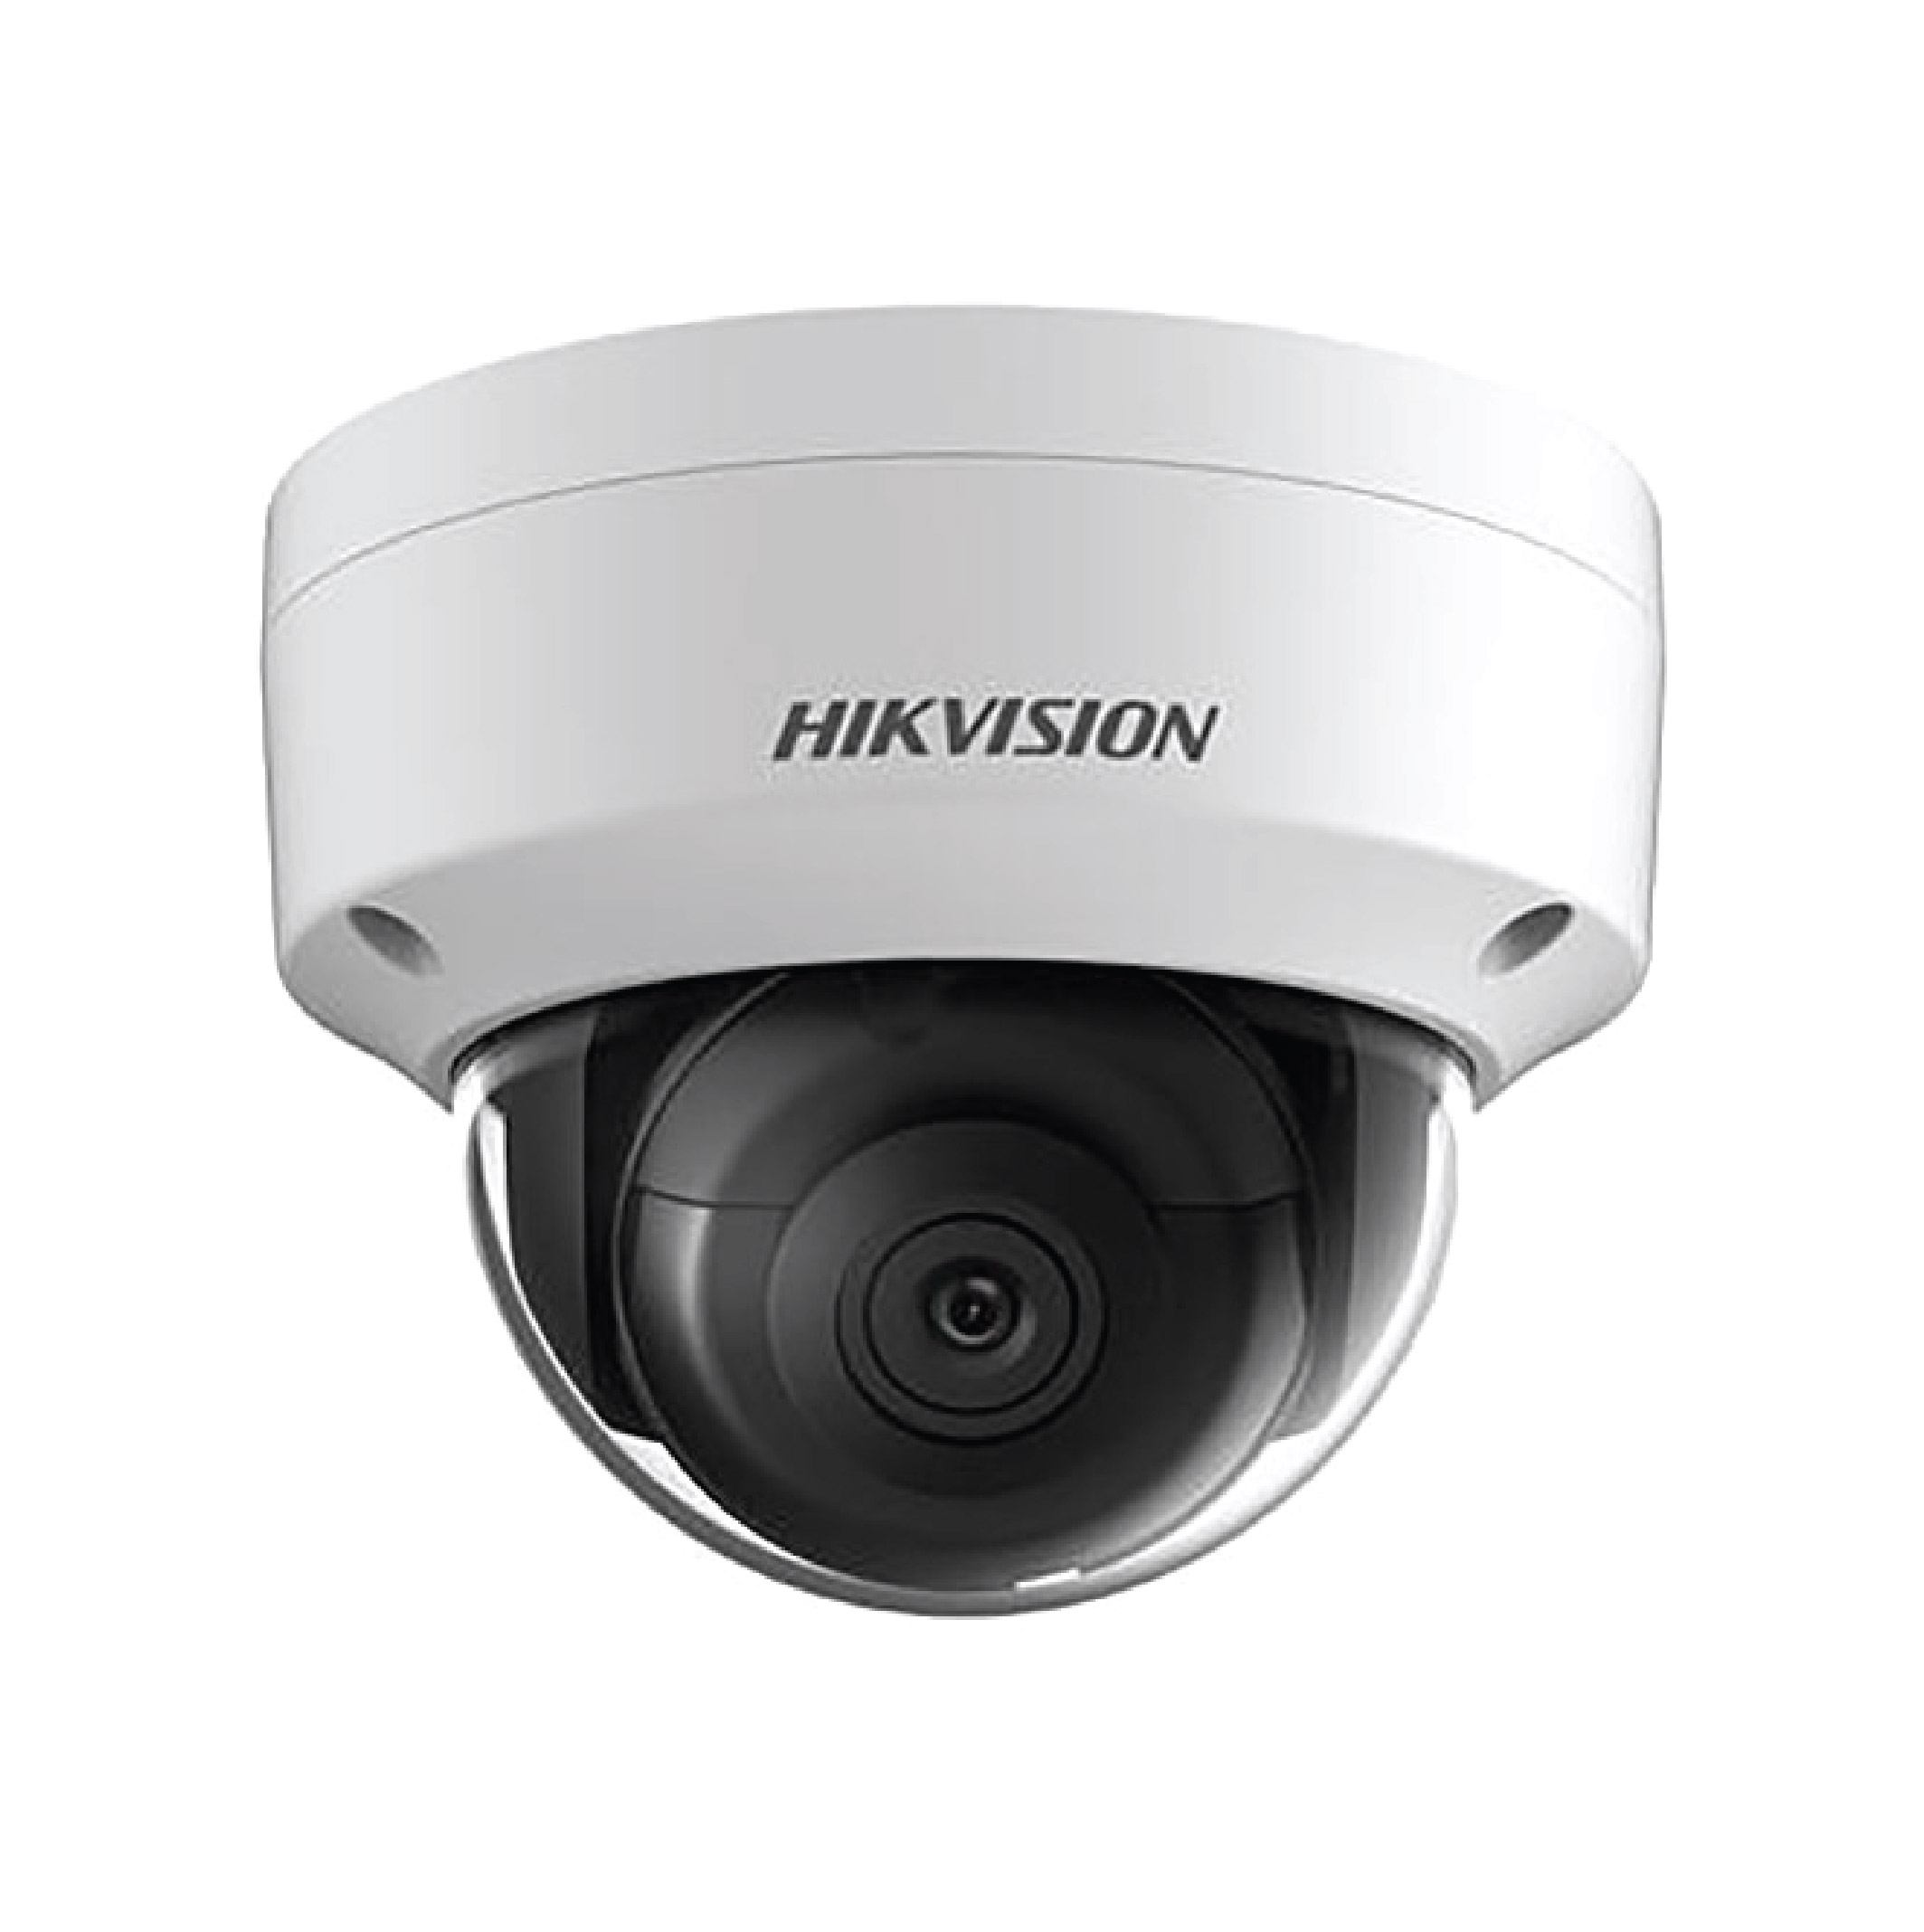 HIKVISION DS-2CD2145FWD-I IP Camera